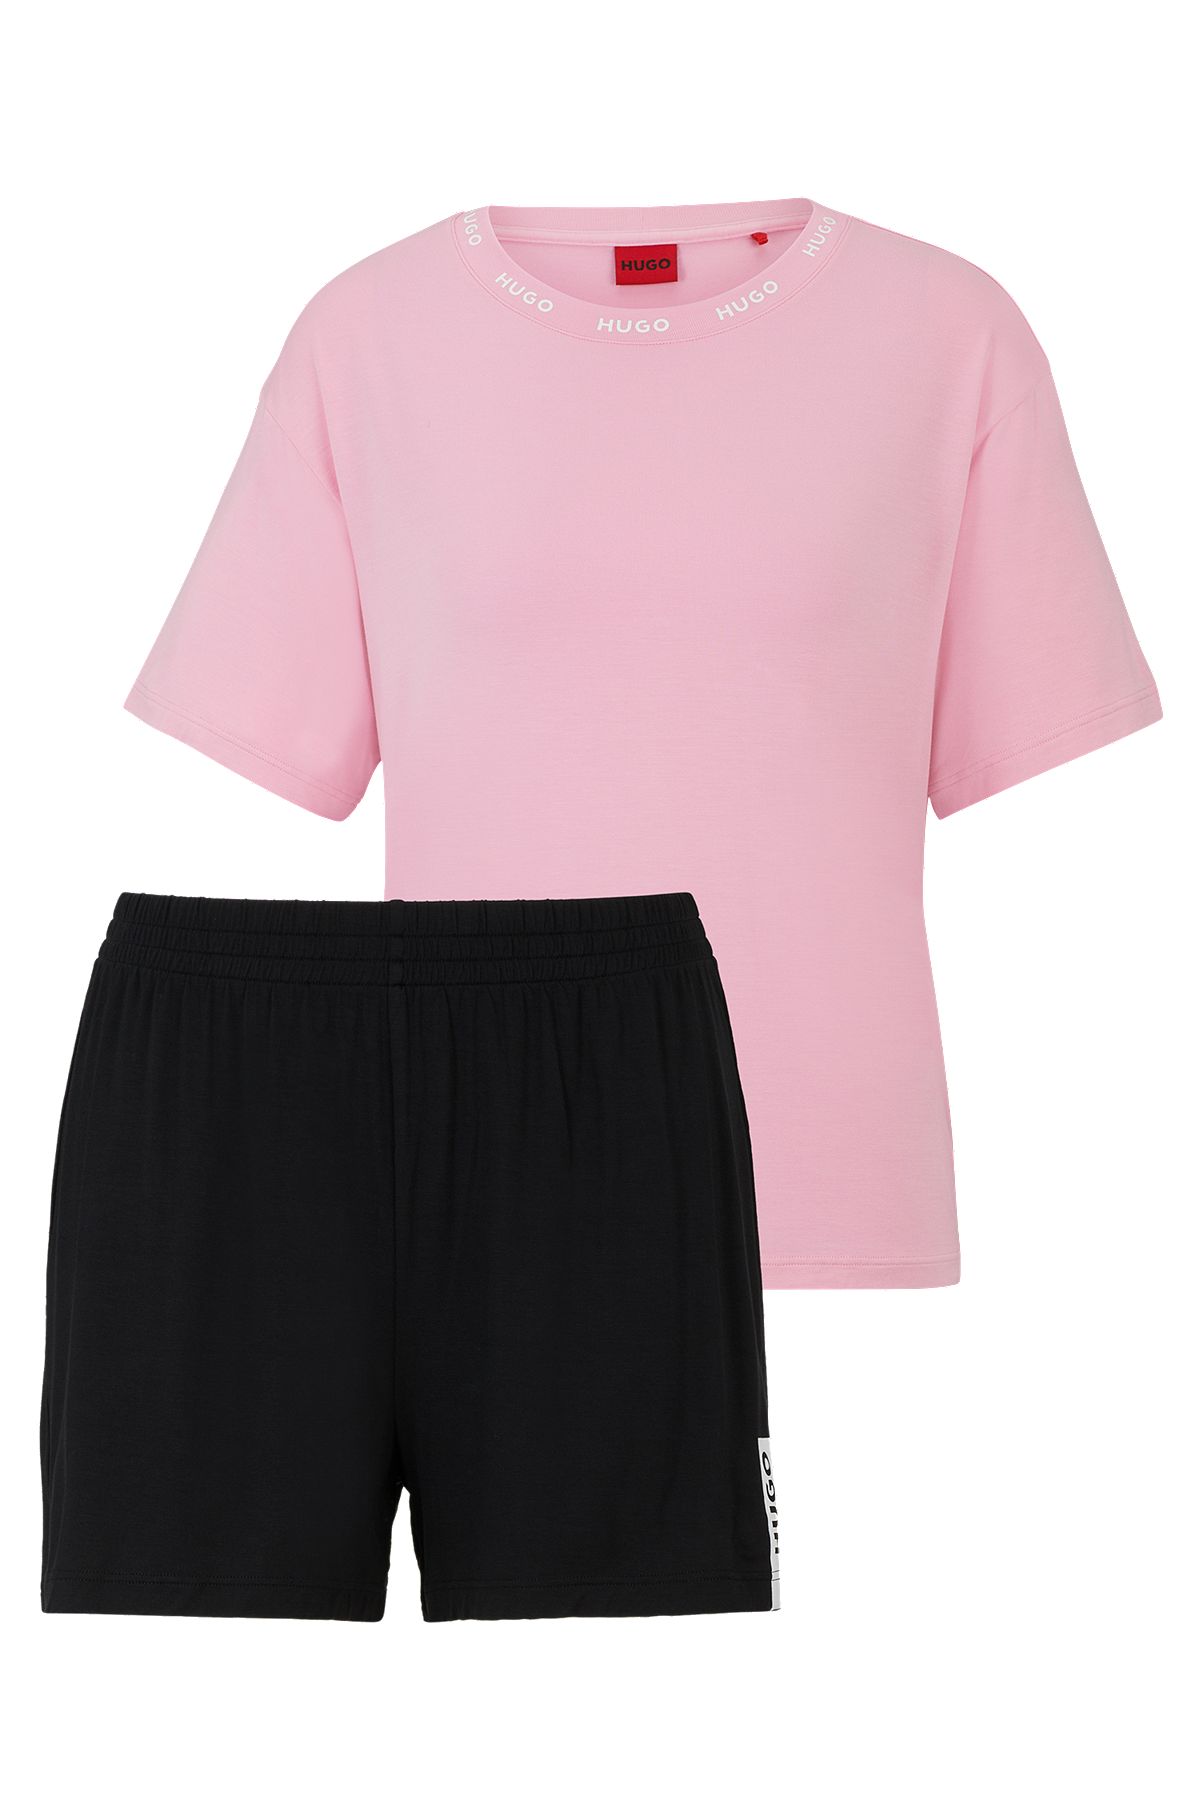 Stretch-jersey pyjamas with contrast logo details, Pink